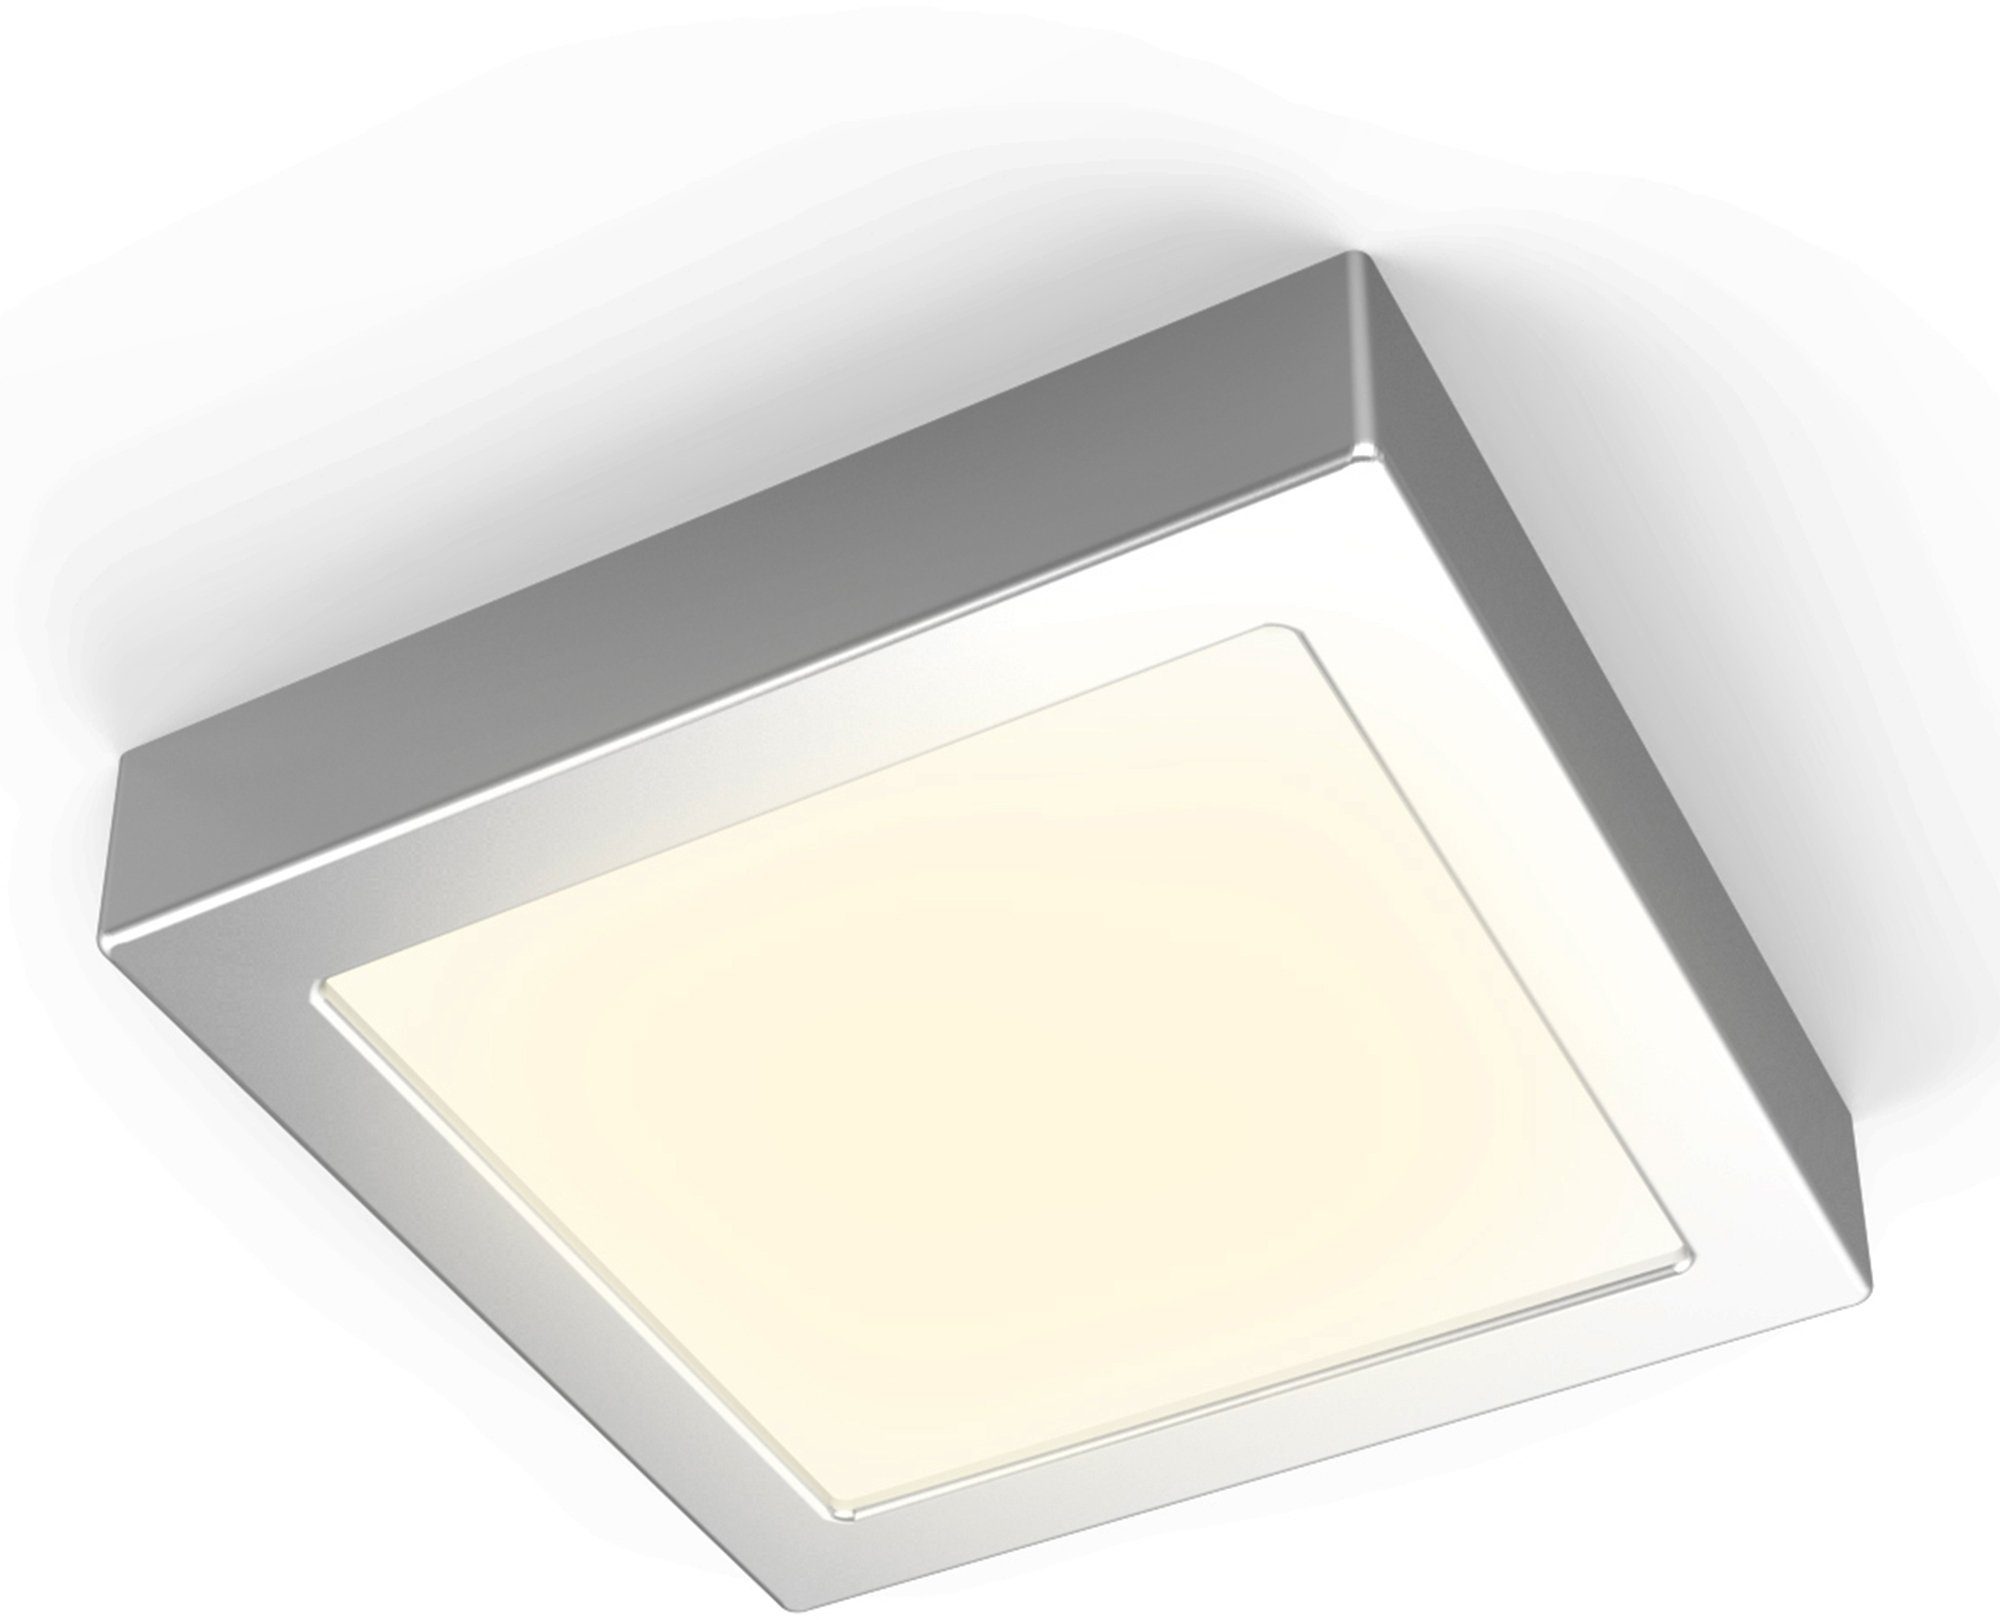 Aufbaustrahler LED Warmweiß, B.K.Licht 12W Panel Unterbauleuchte LED Lampe Aufputzspot Aufbauleuchte fest integriert, Garnet, LED